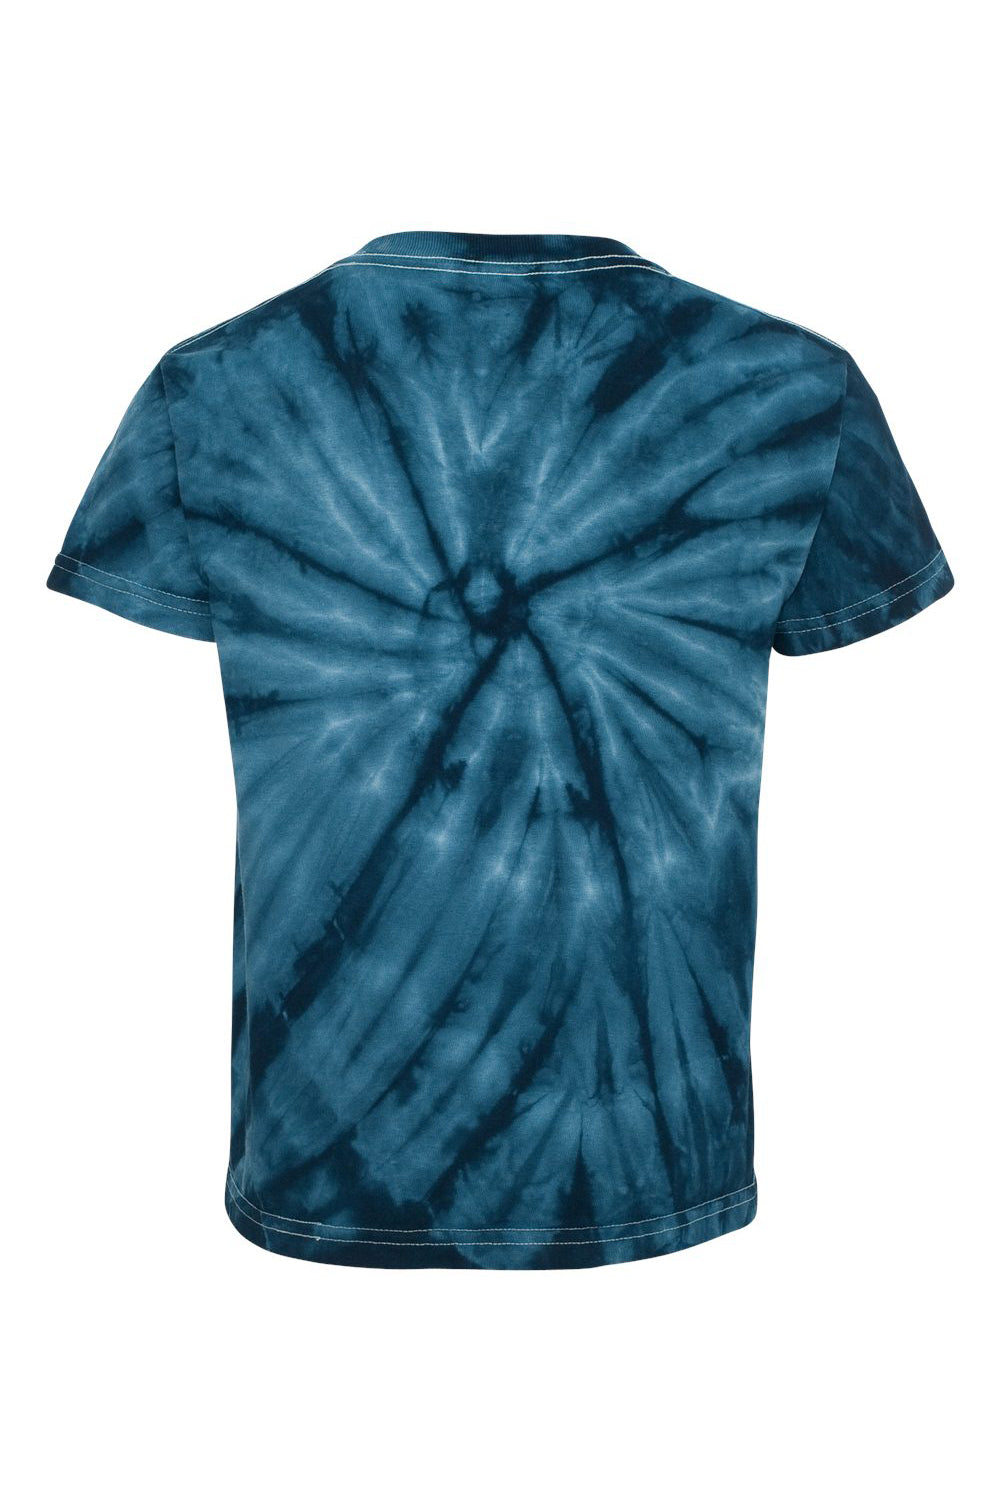 Dyenomite 20BCY Youth Cyclone Pinwheel Tie Dyed Short Sleeve Crewneck T-Shirt Navy Blue Flat Back